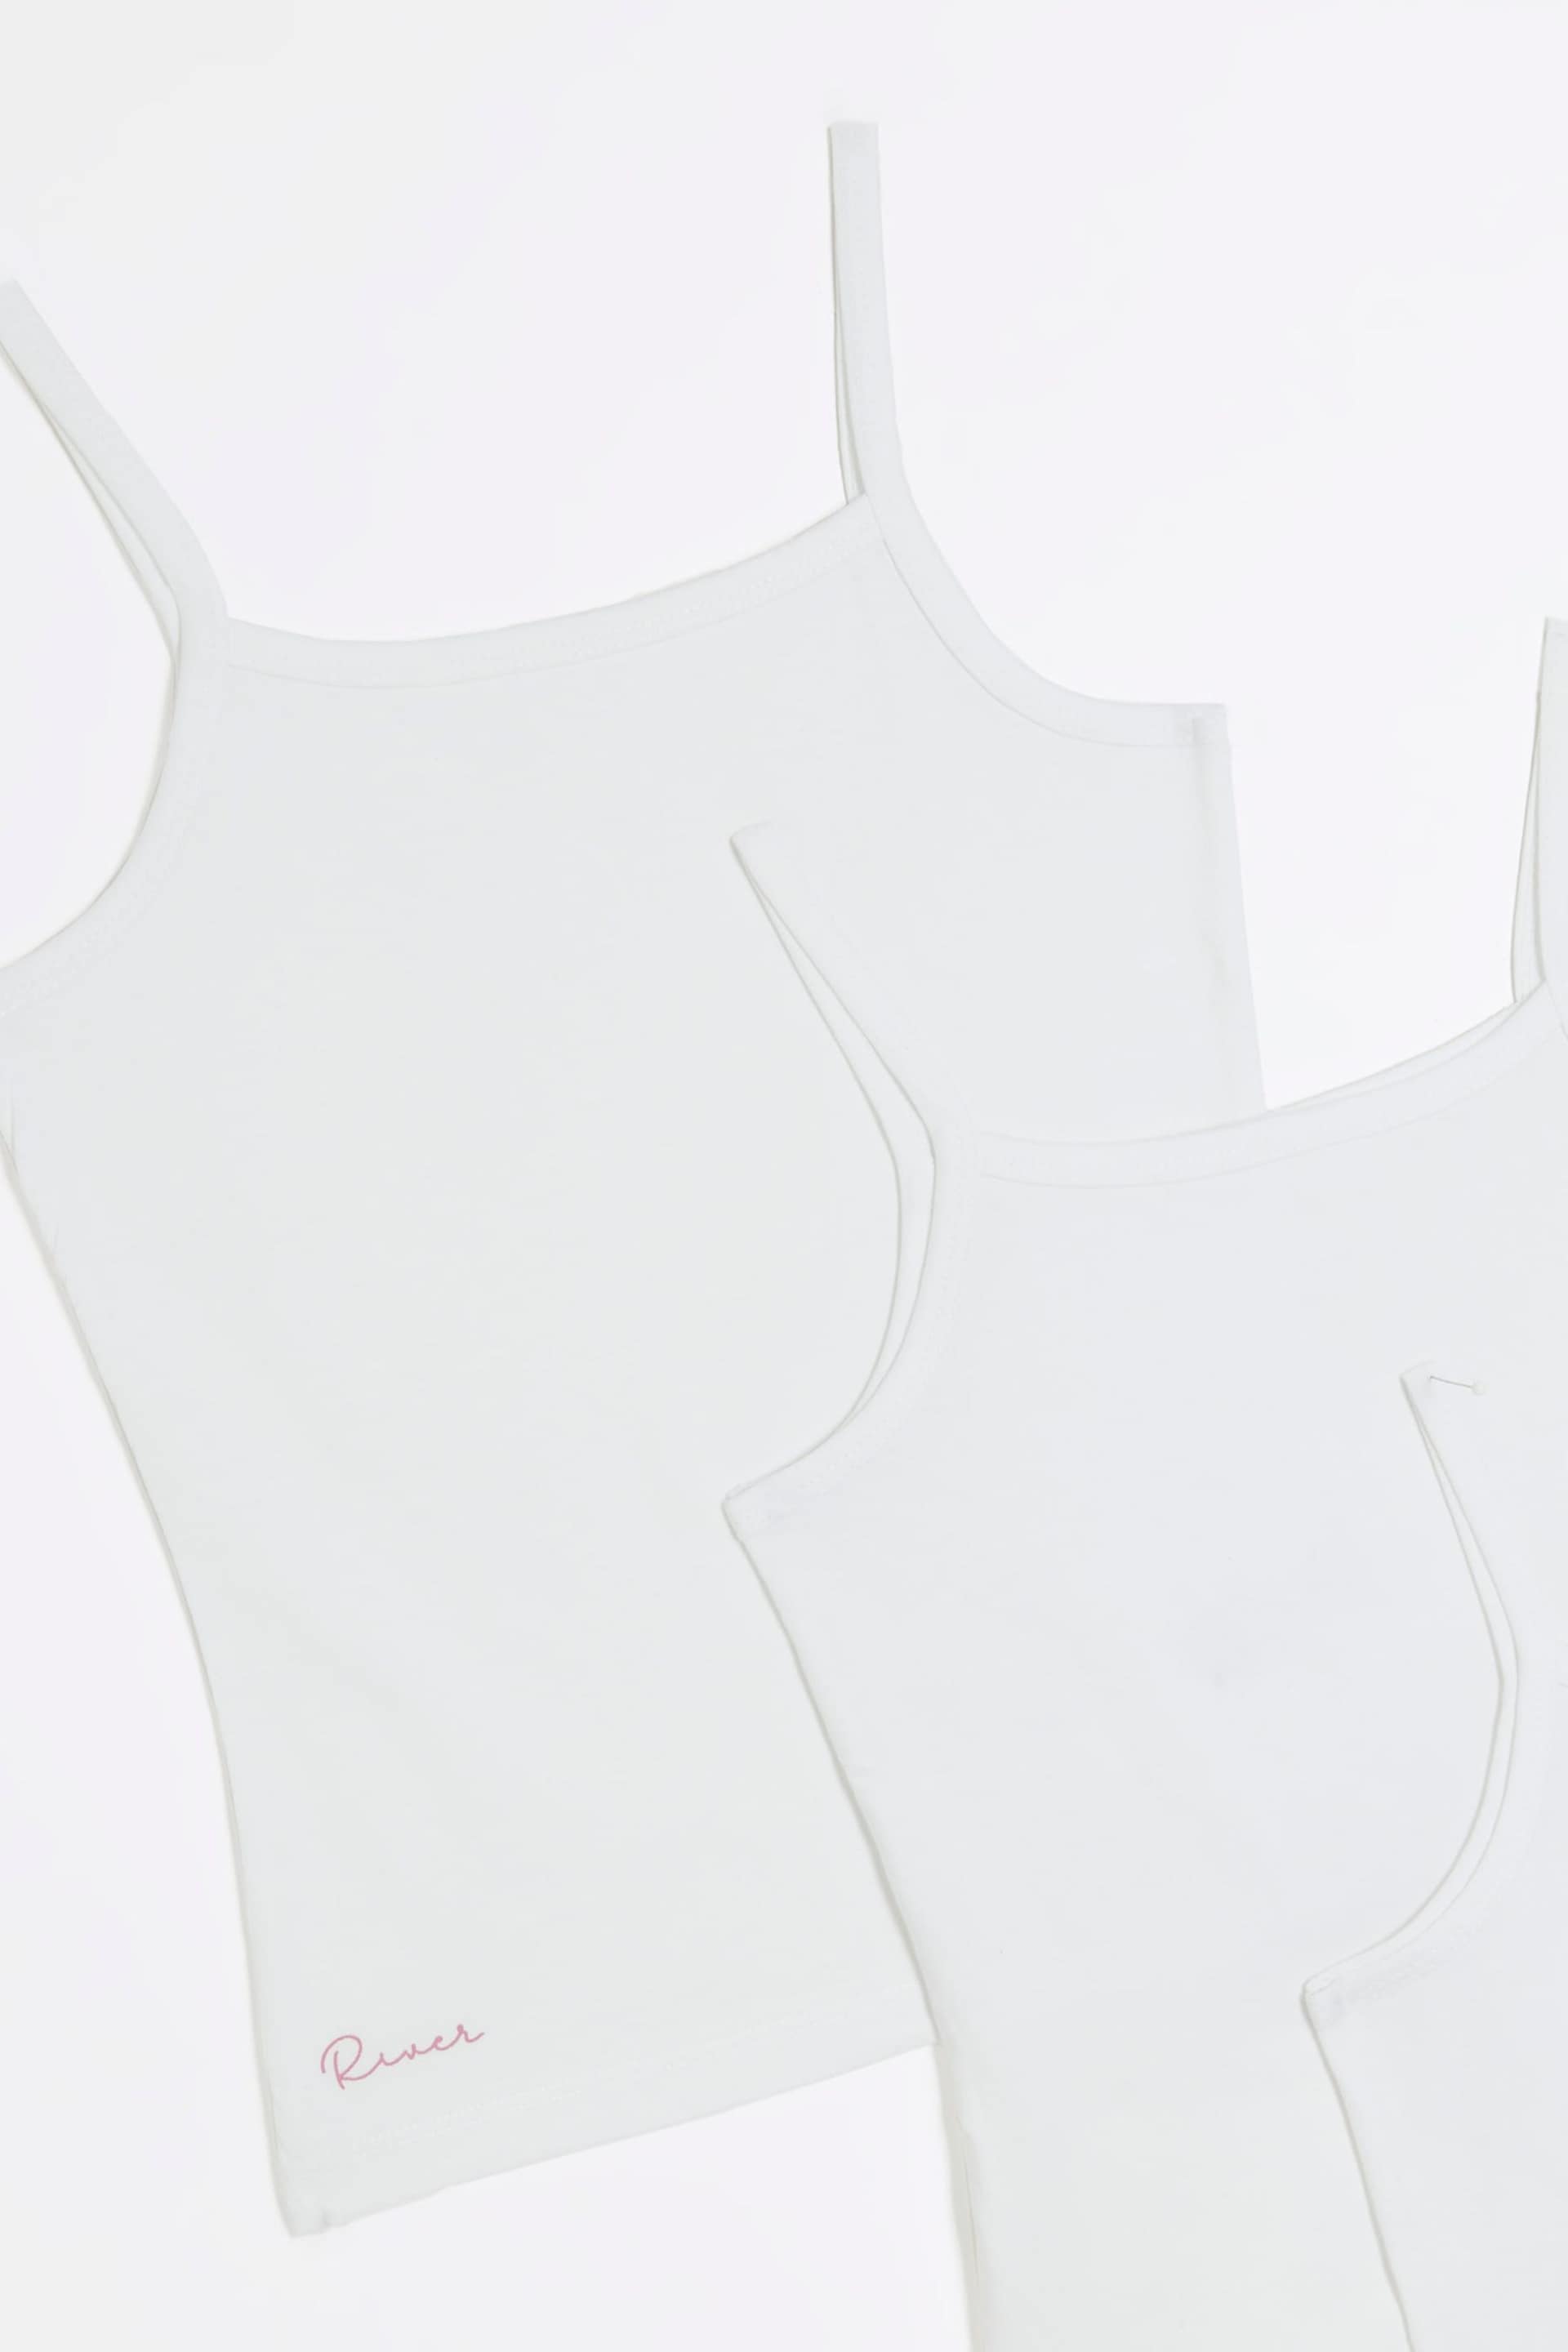 River Island White Print Girls Vest 3 Pack - Image 3 of 4